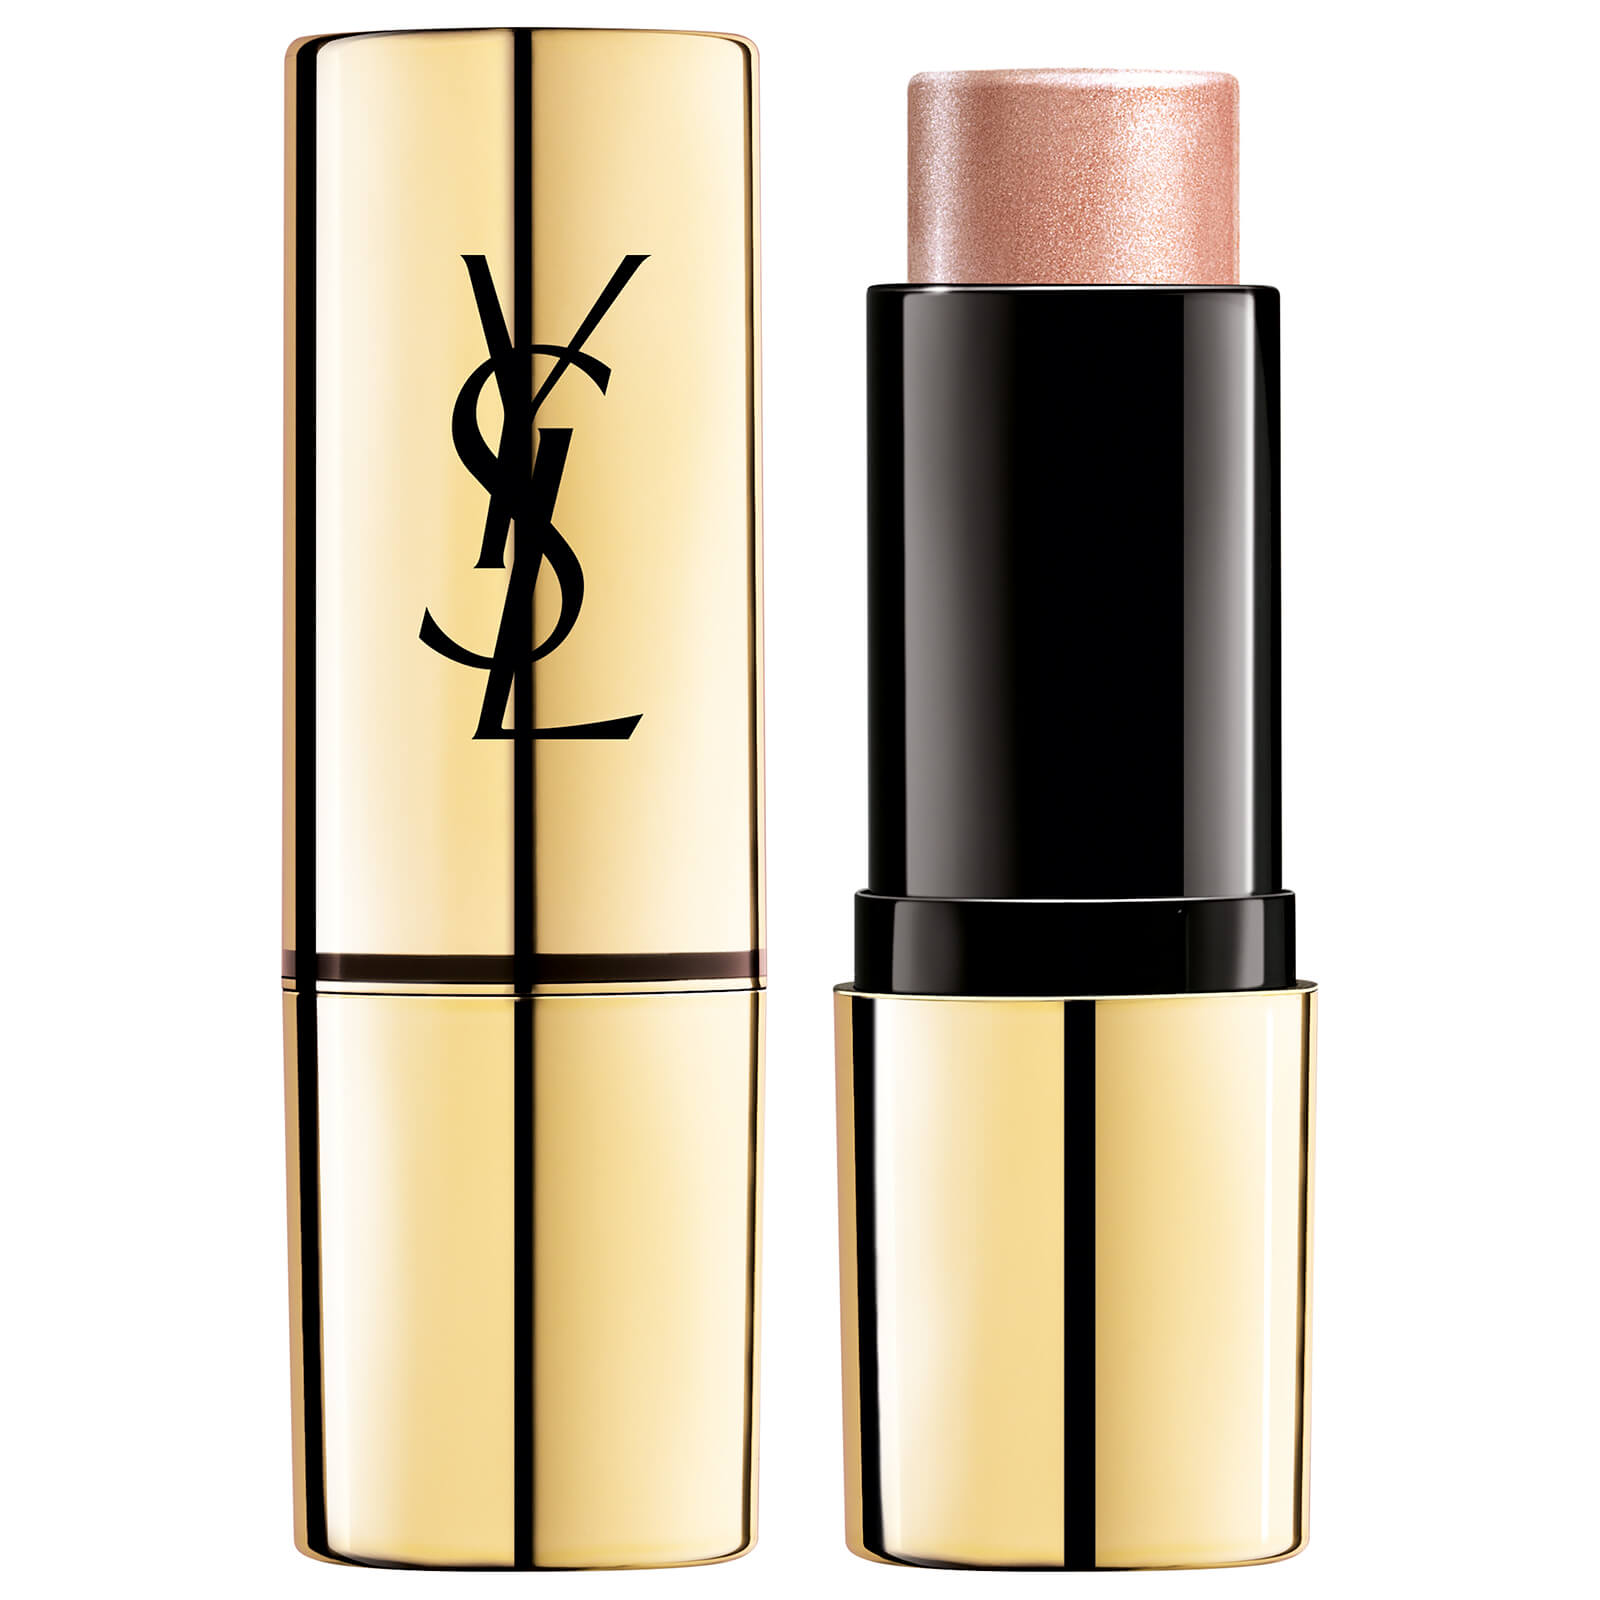 Ysl Yves Saint Laurent Touche Éclat Shimmer Stick Highlighter 9g (Various Shades) - 3 Rose Gold